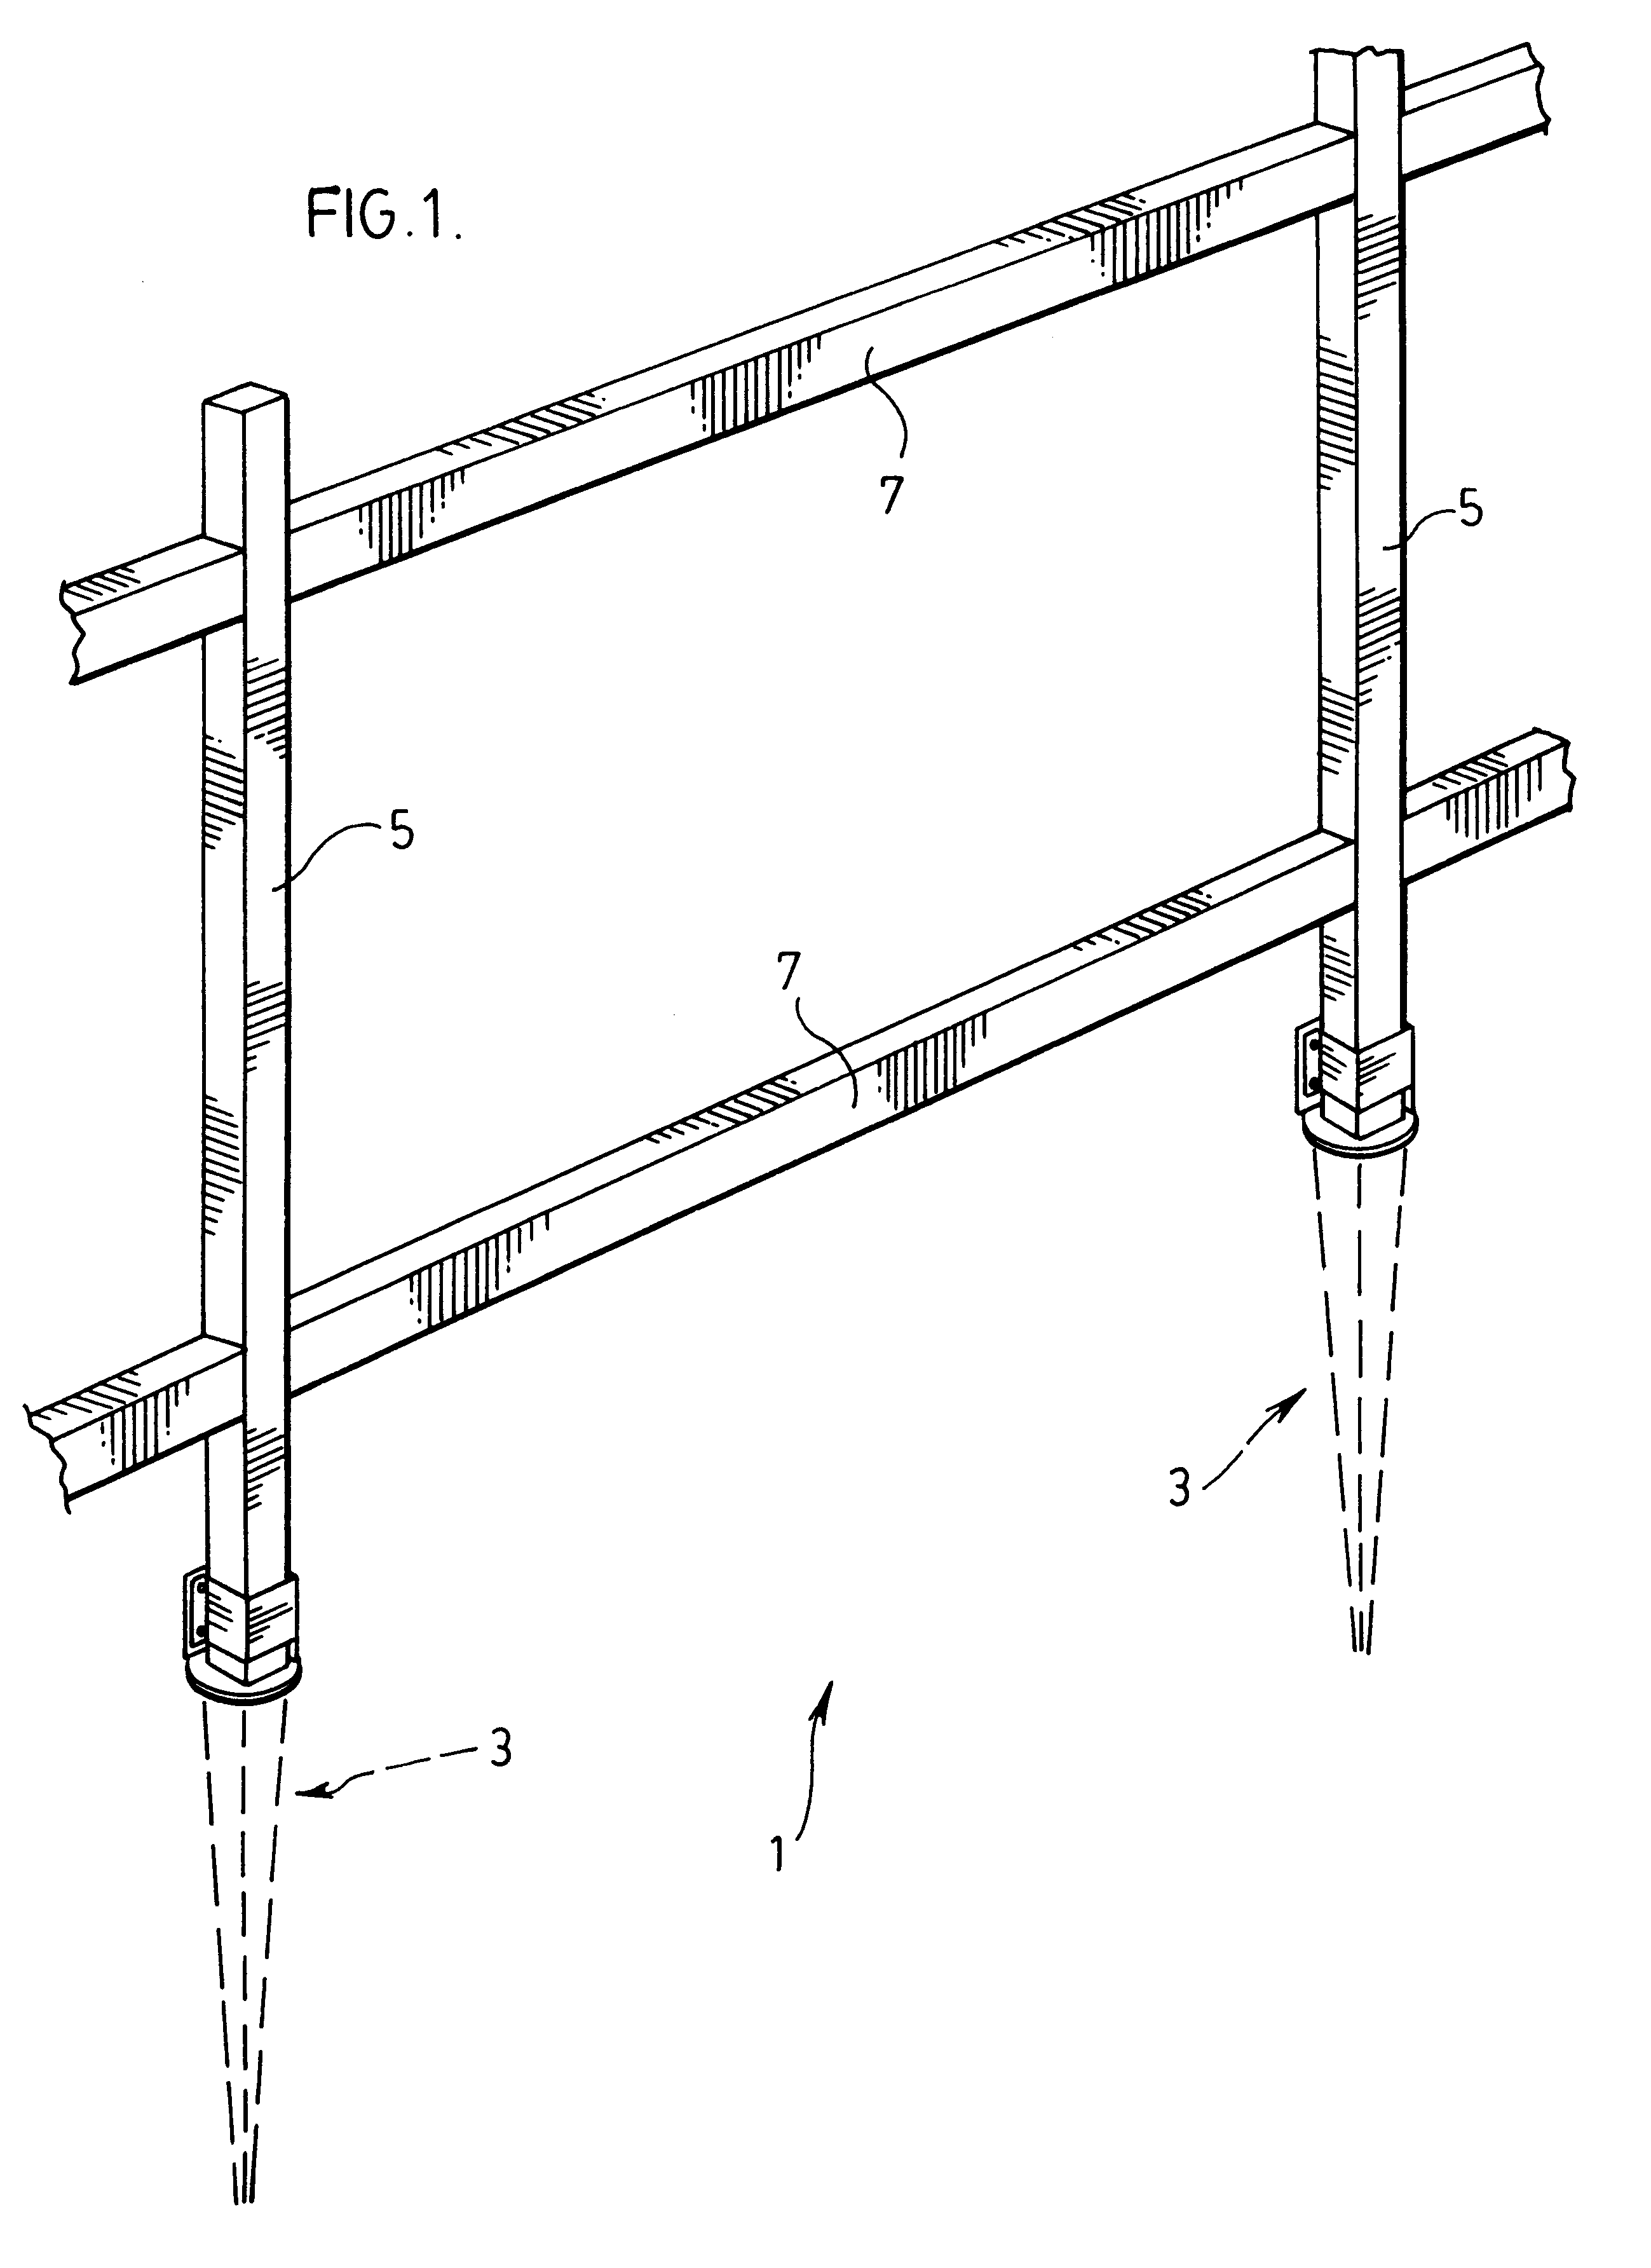 Ground embedding post holder with adjustable bracket